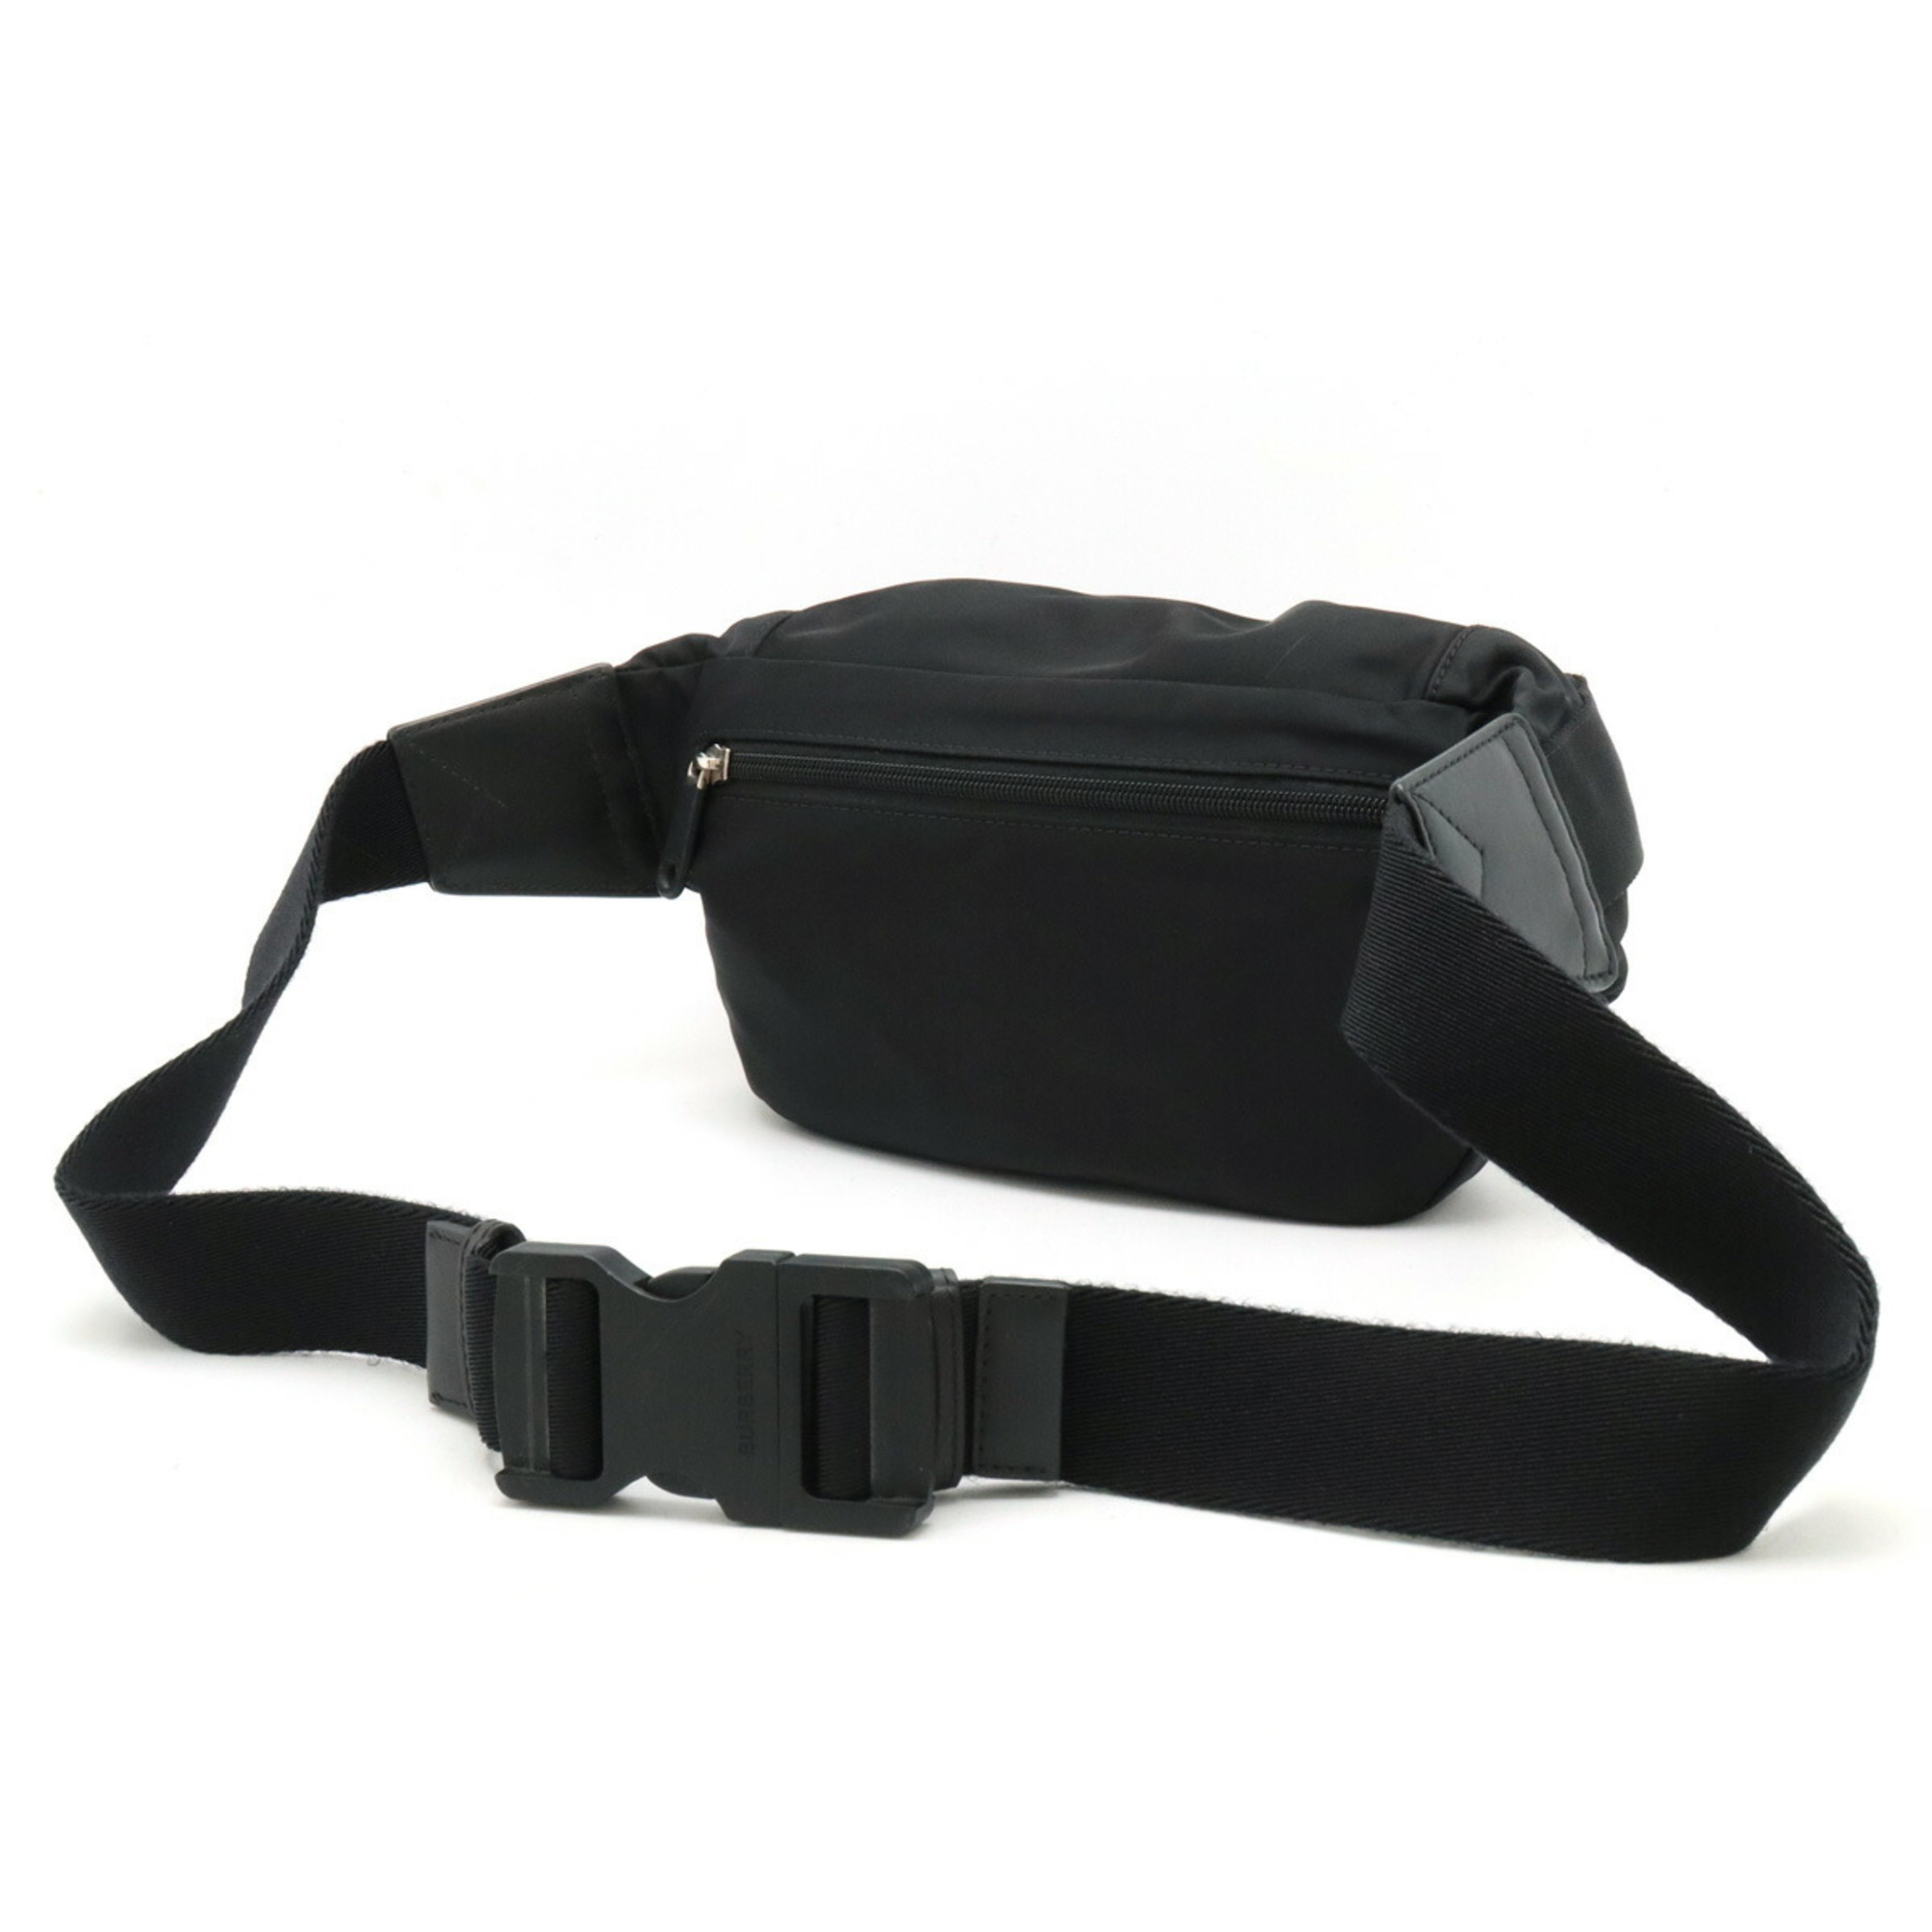 BURBERRY SONNY Body bag, bum waist pouch, nylon, leather, black, 8025668